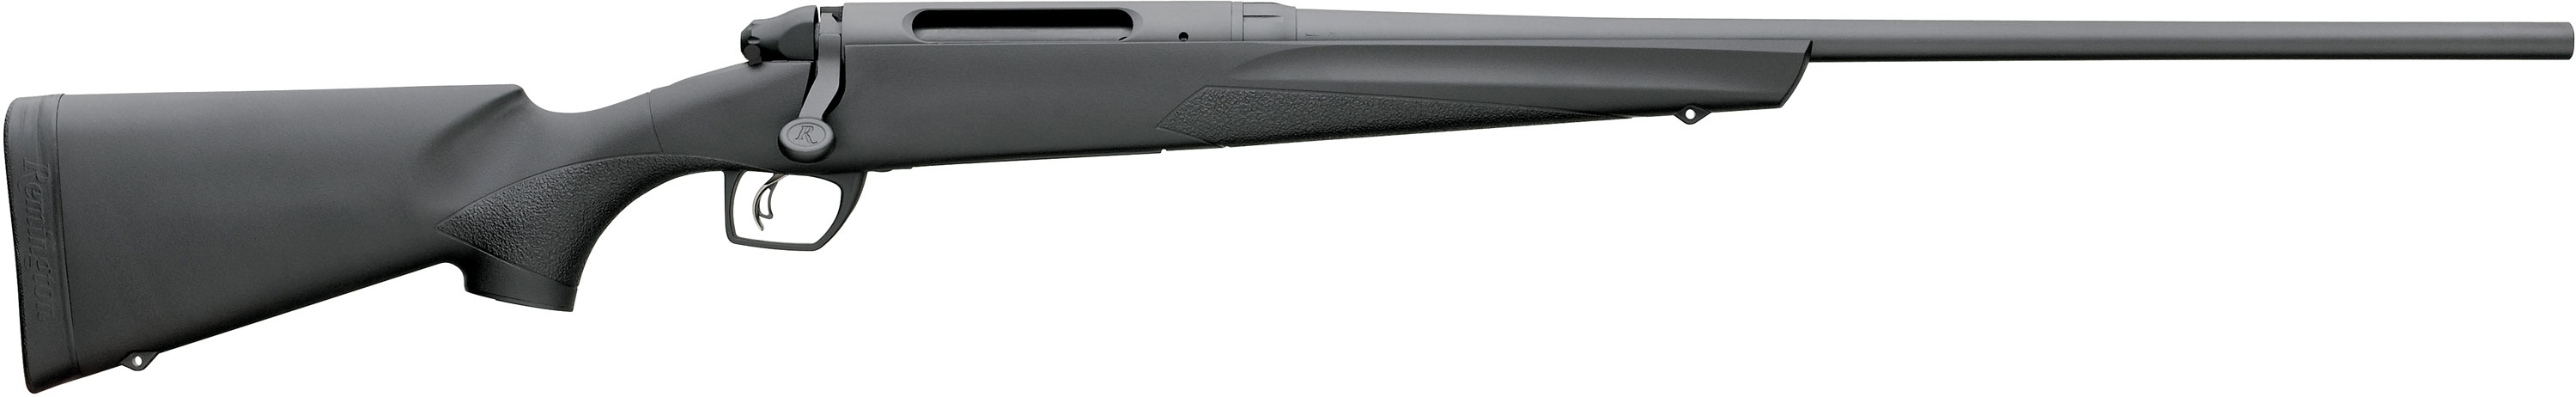 RA 783 308WIN 22'' BLK 4RD - Long Guns